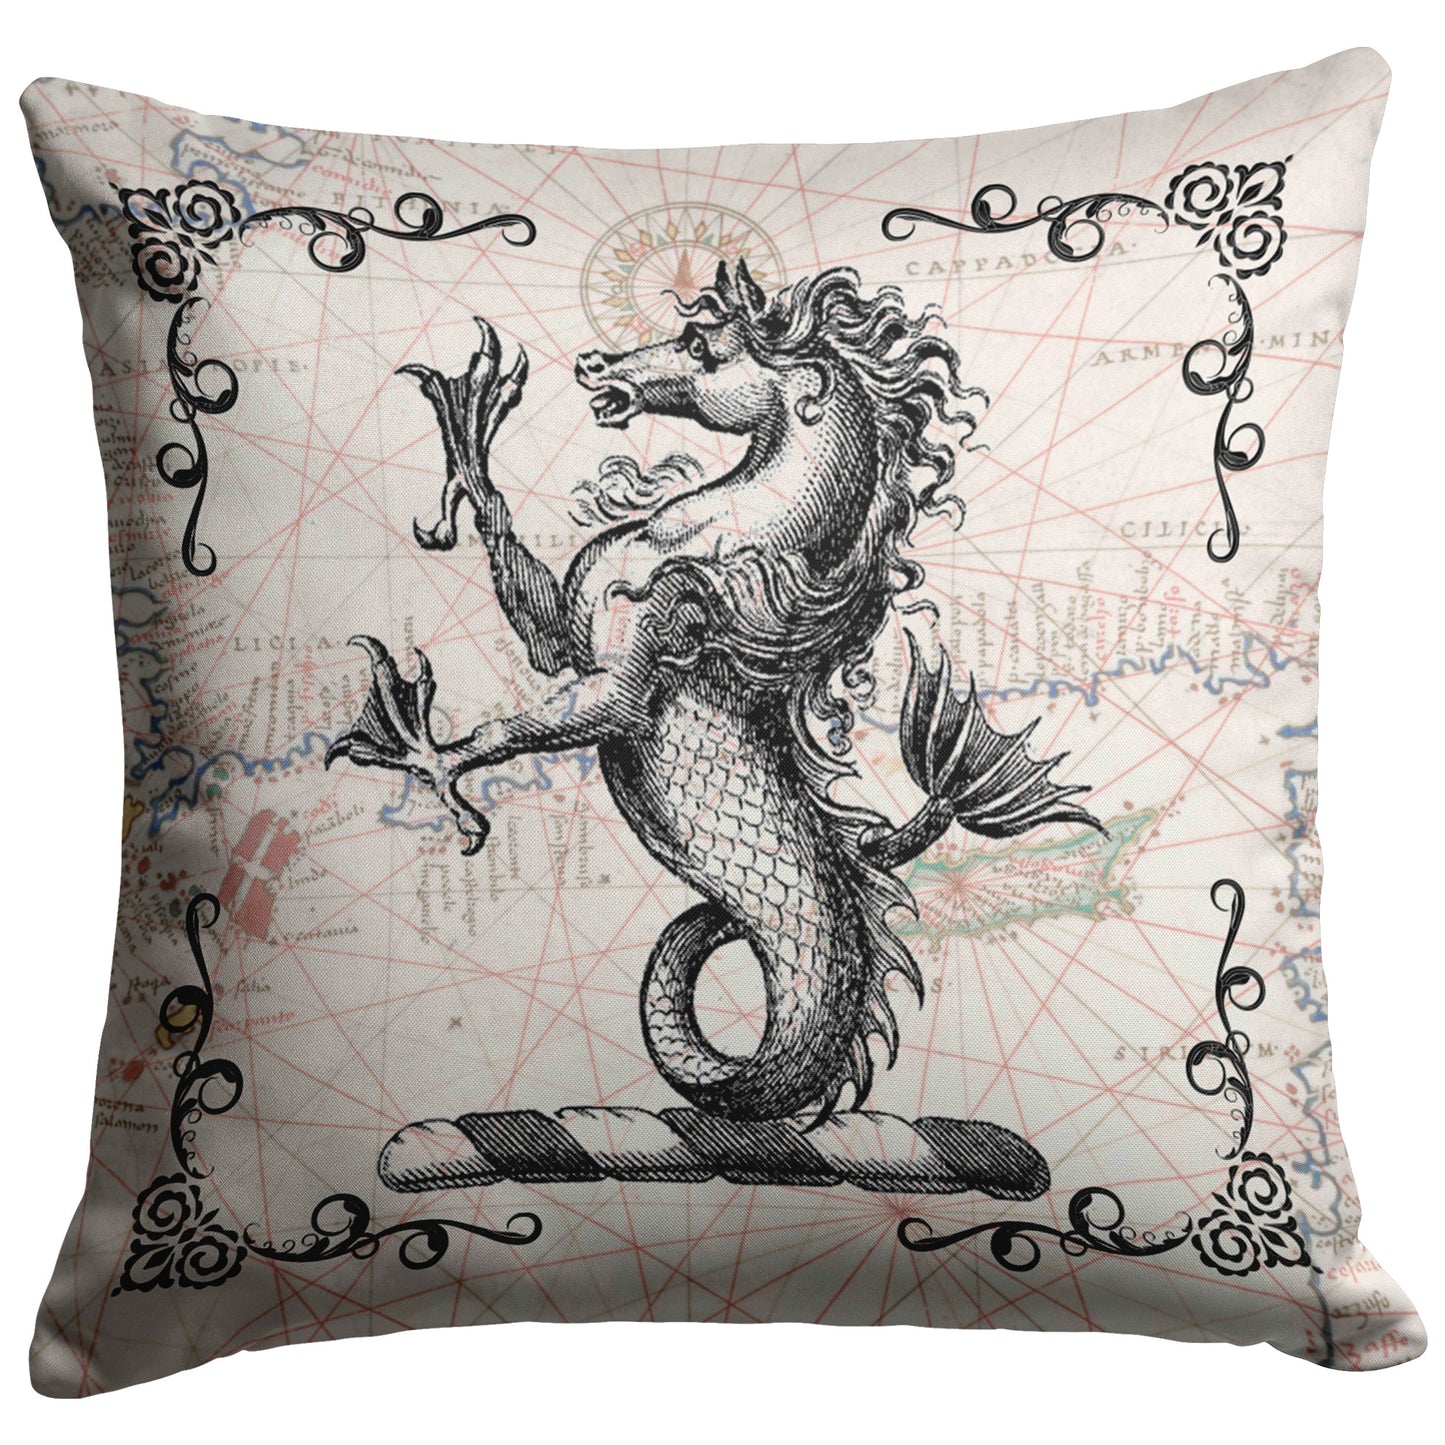 Sea Monster Throw Pillow - Hippocampus